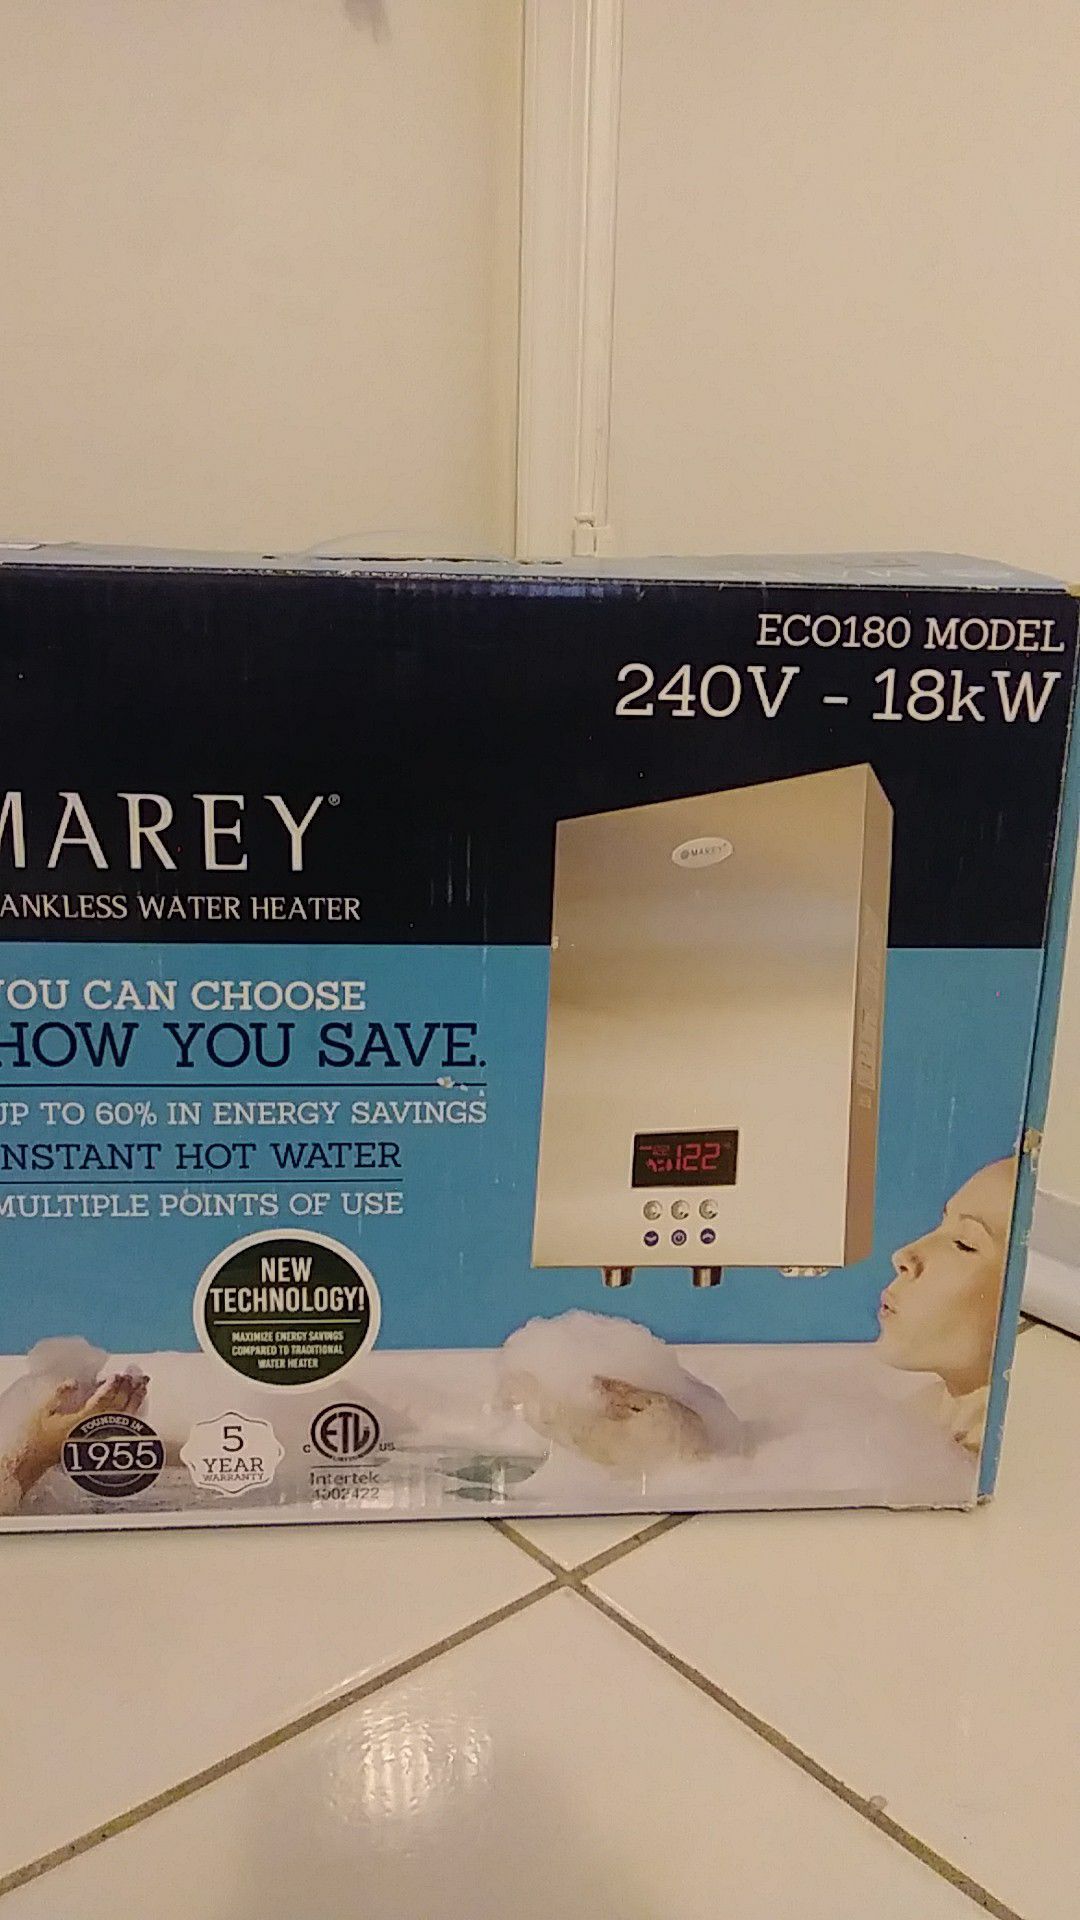 Tankless water heater Marey brand, Model ECO180.